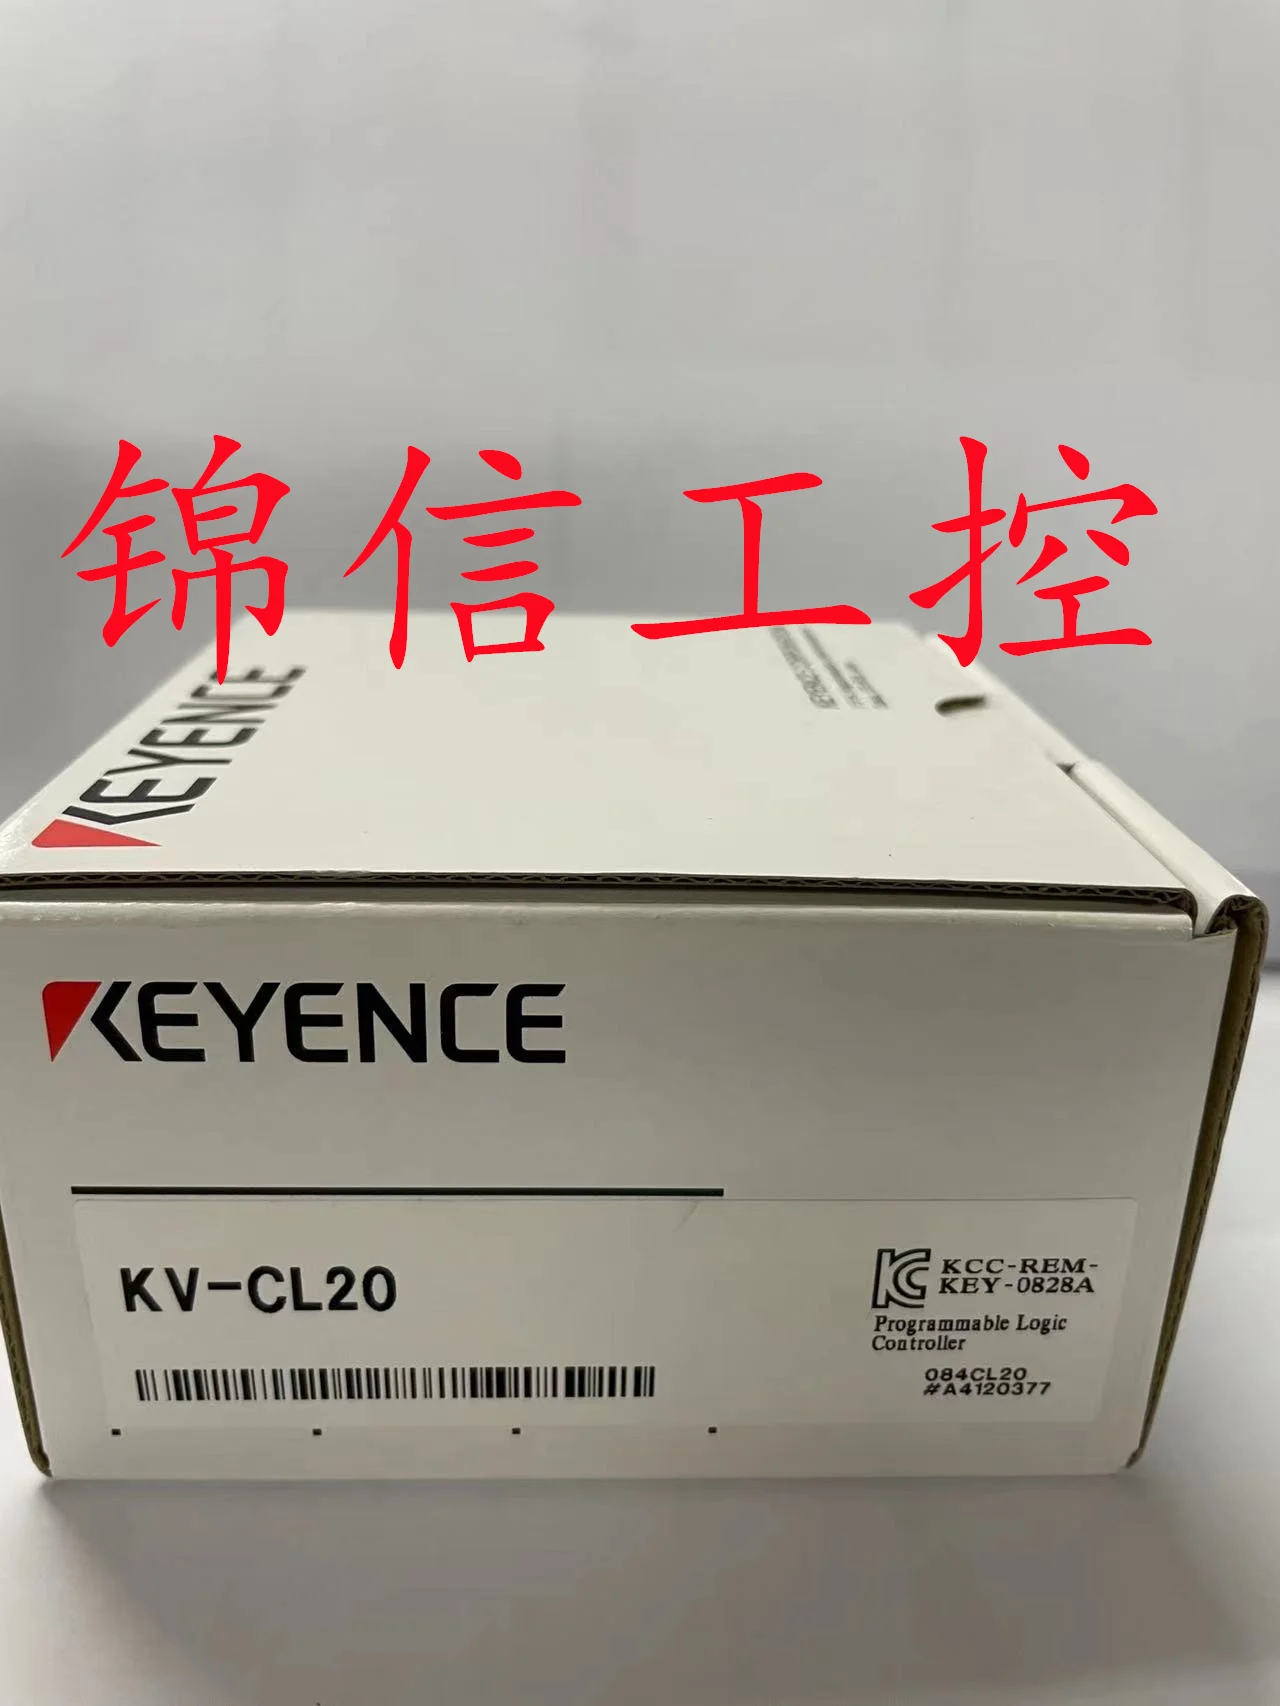 

Brand-new Original Authentic KV-CL20 KEYENCE PLC In Stock.